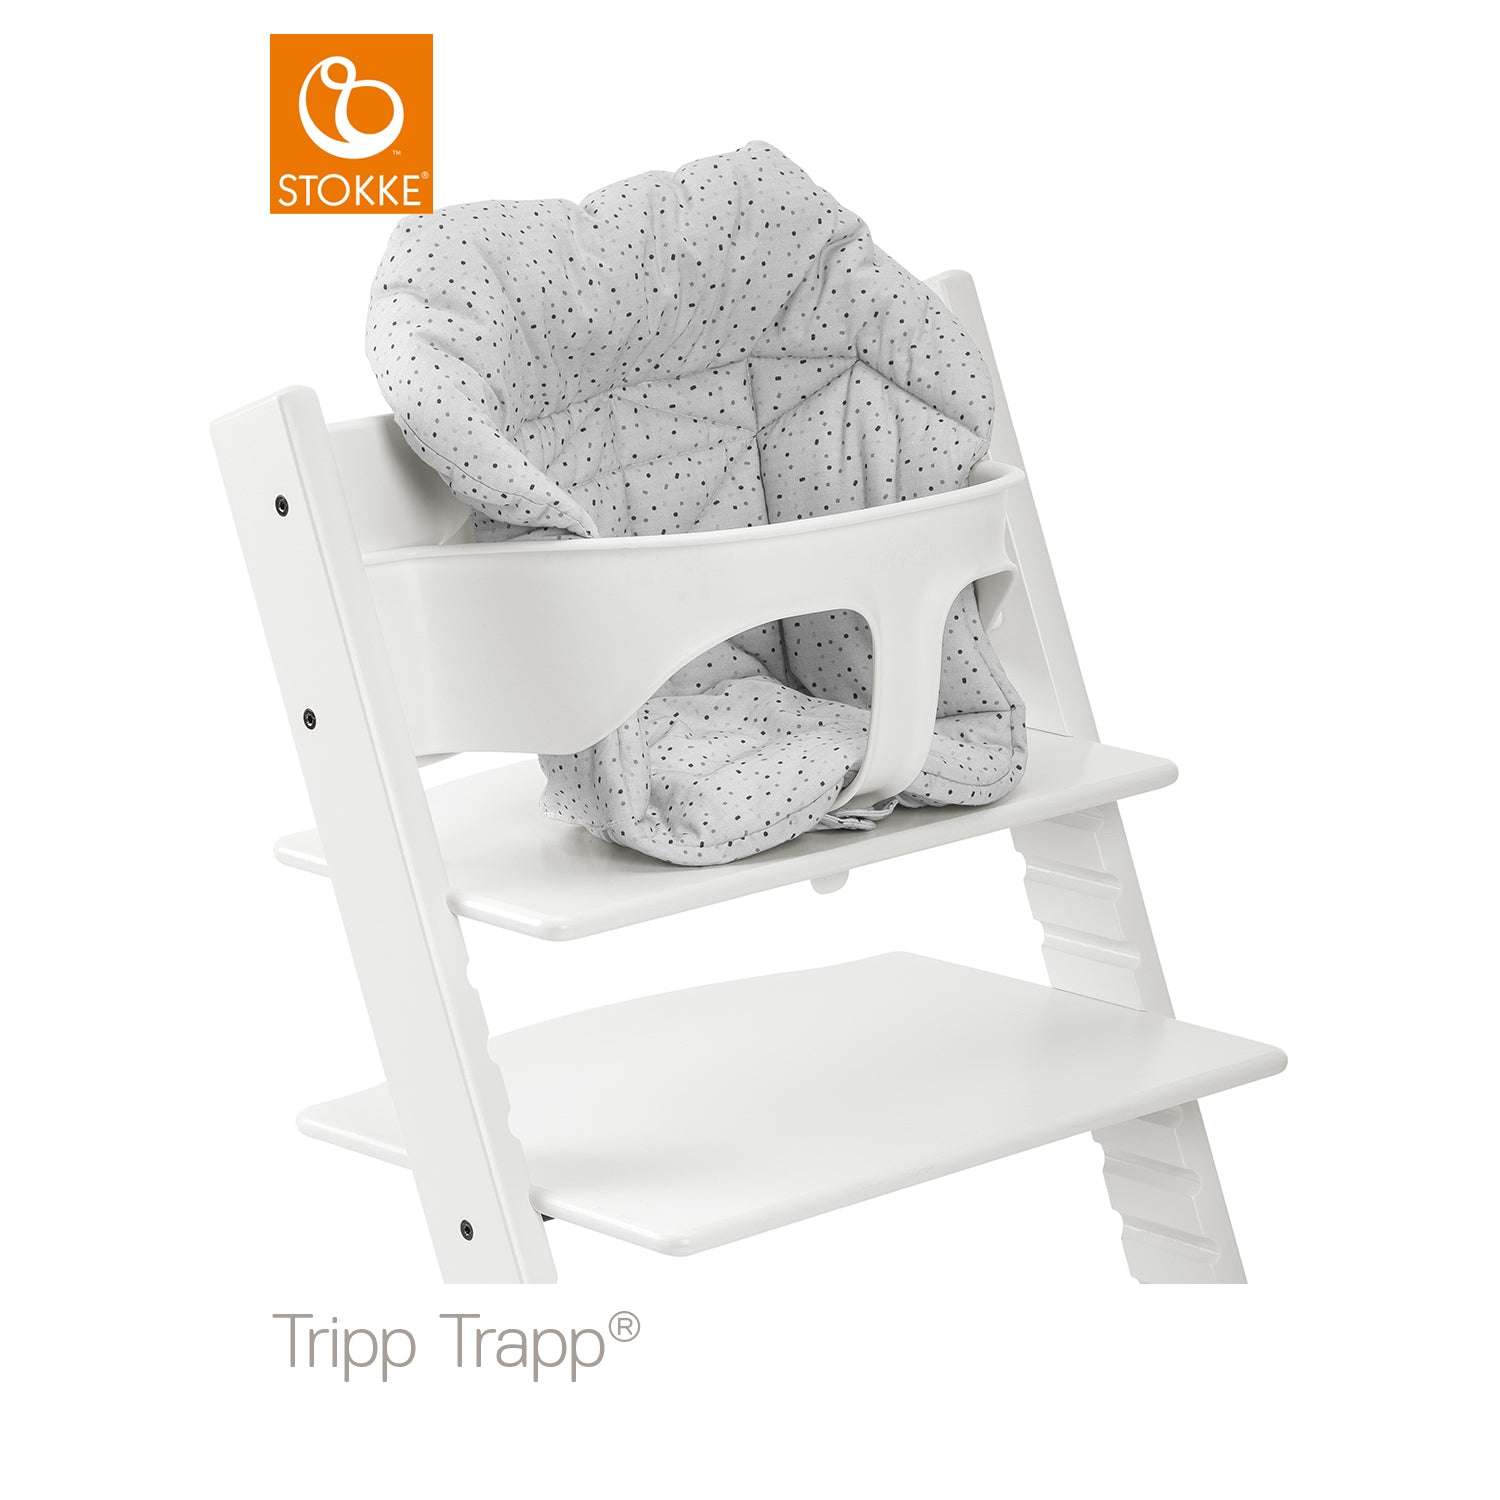 STOKKE - Baby Cuscino per Sedia TRIPP TRAPP – Iperbimbo